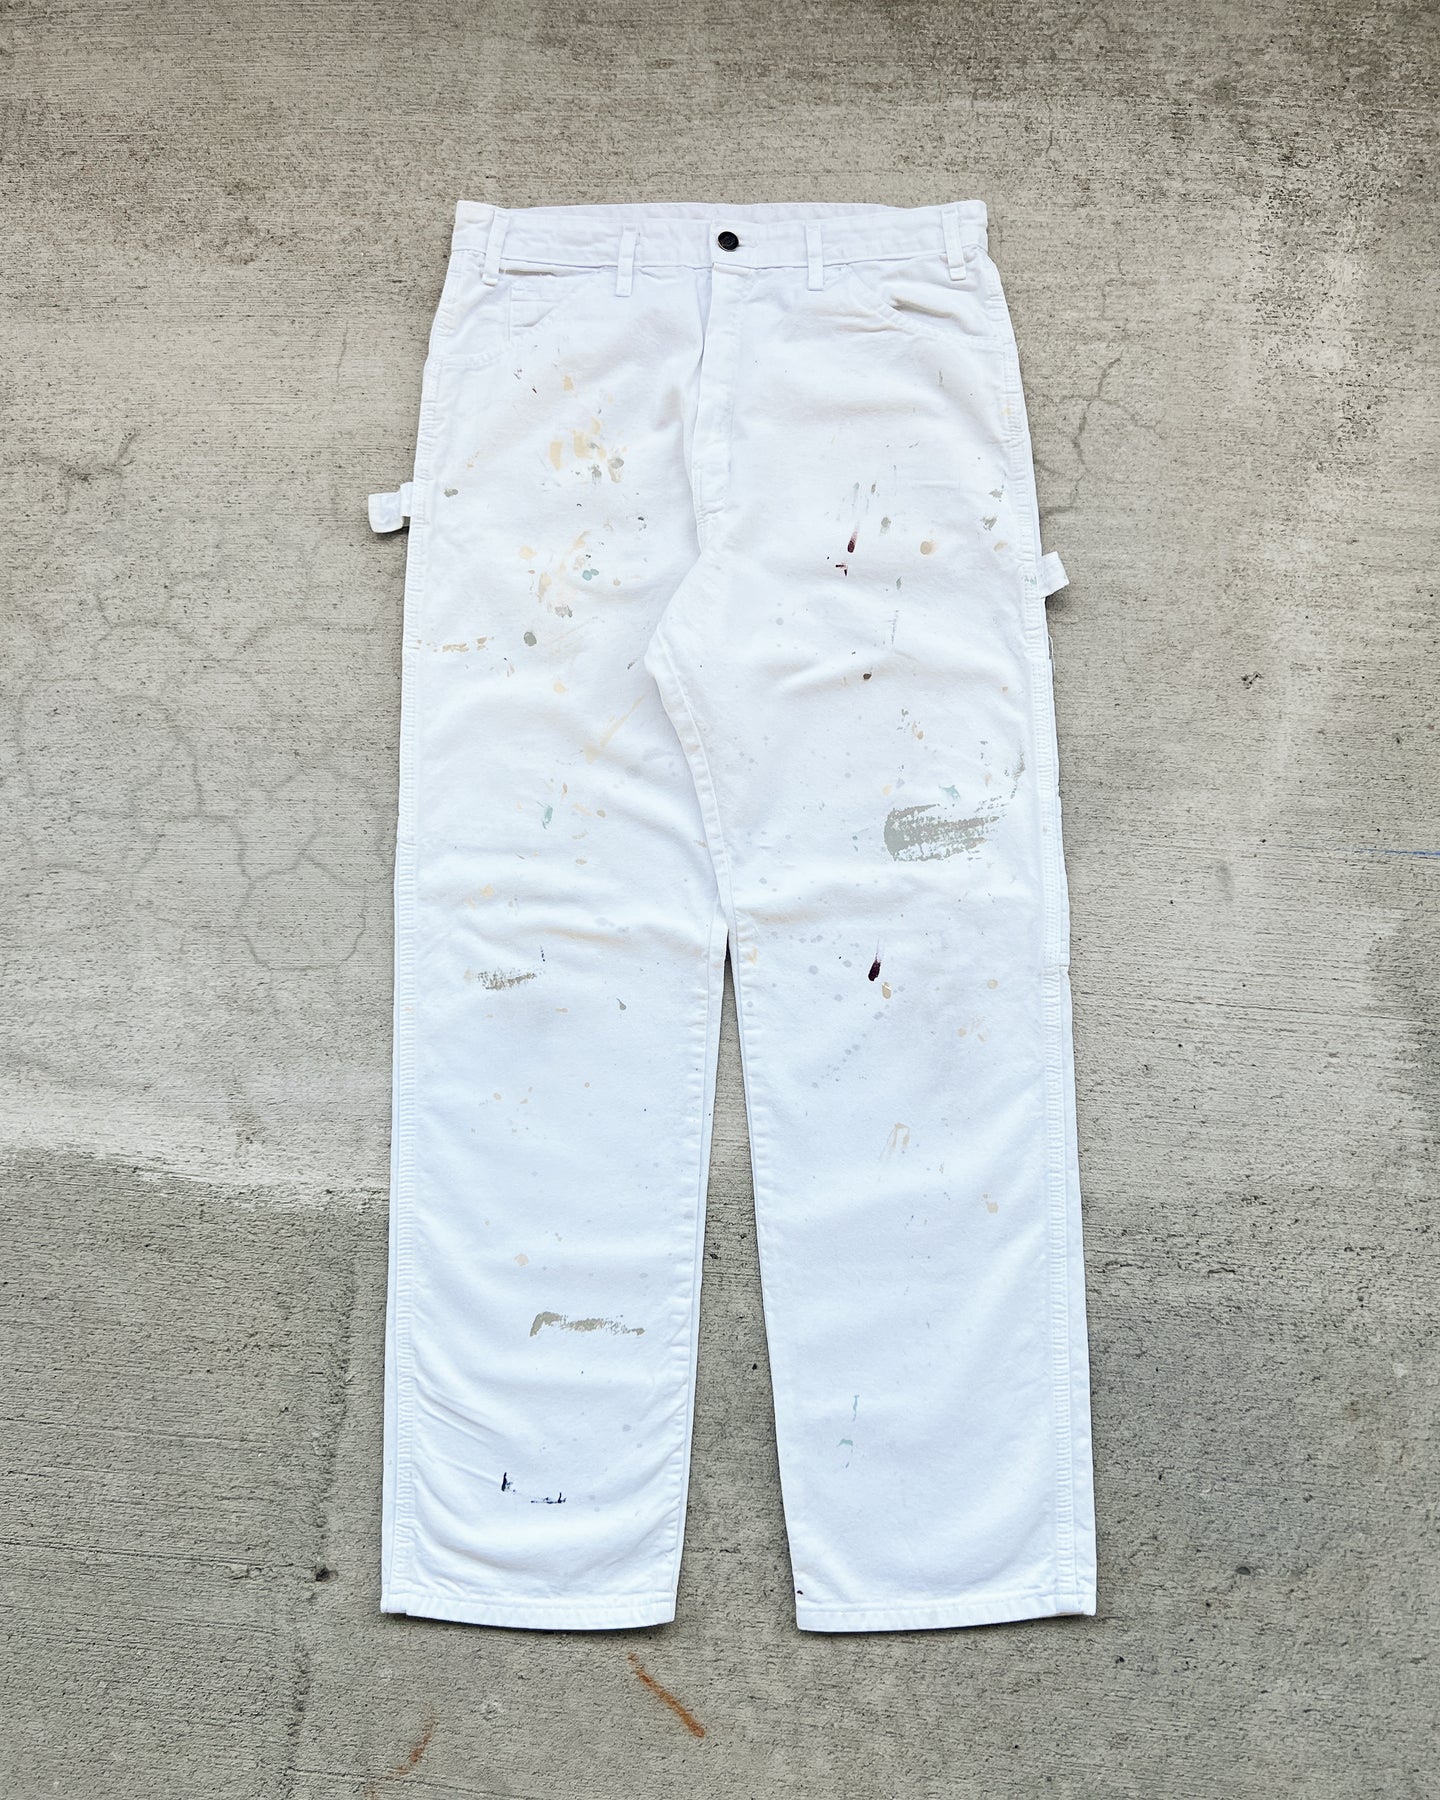 Dickies Painter Carpenter Pants - Size 33 x 32